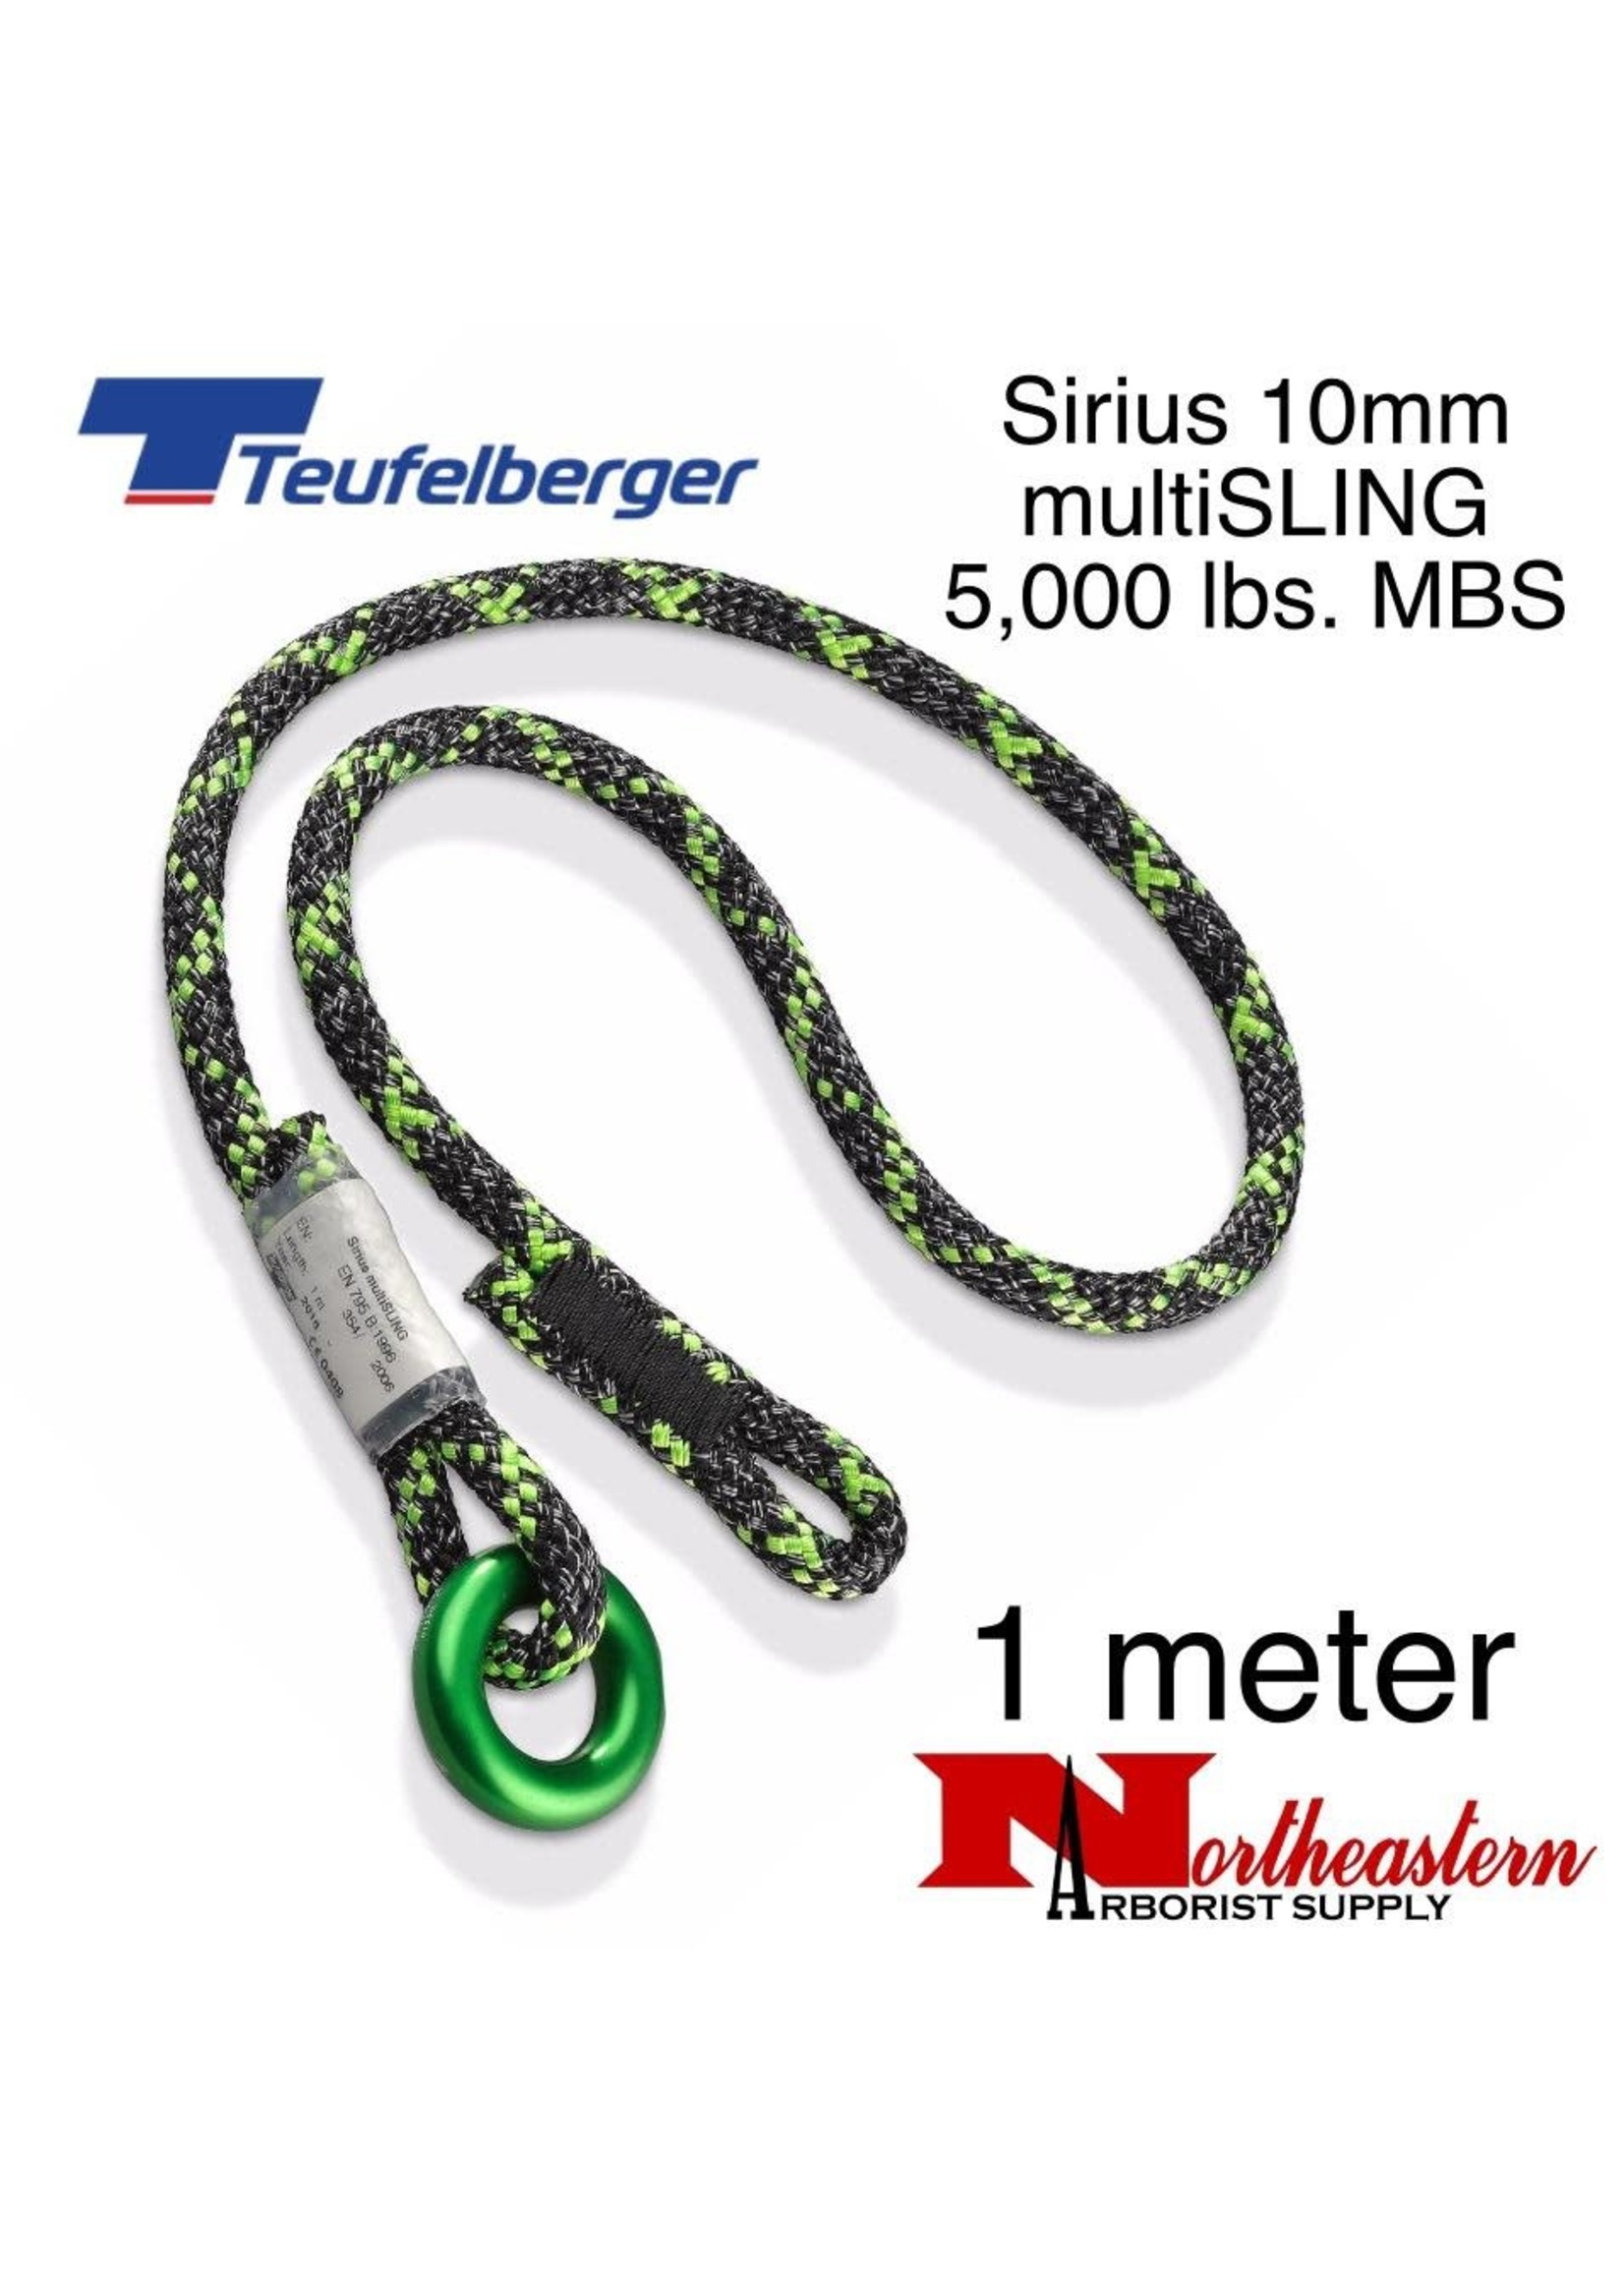 Teufelberger Sirius Multisling Black/Green 10mm x 1M 5,000Lbs. MBS